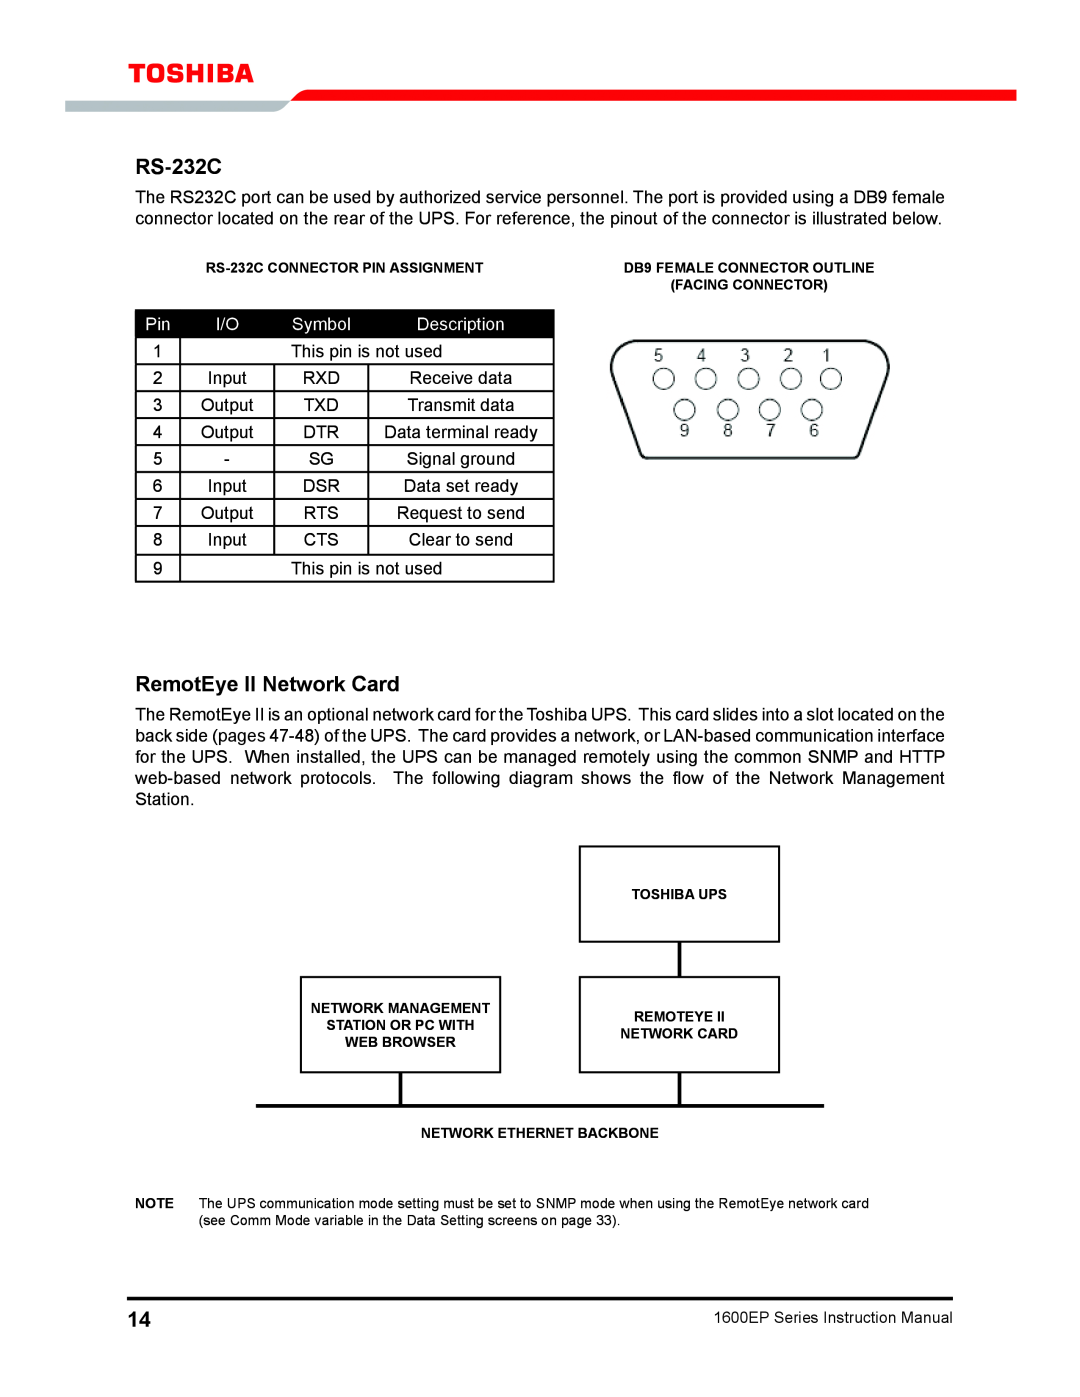 Toshiba 1600EP Series manual RS-232C, RemotEye II Network Card, Symbol, Description 